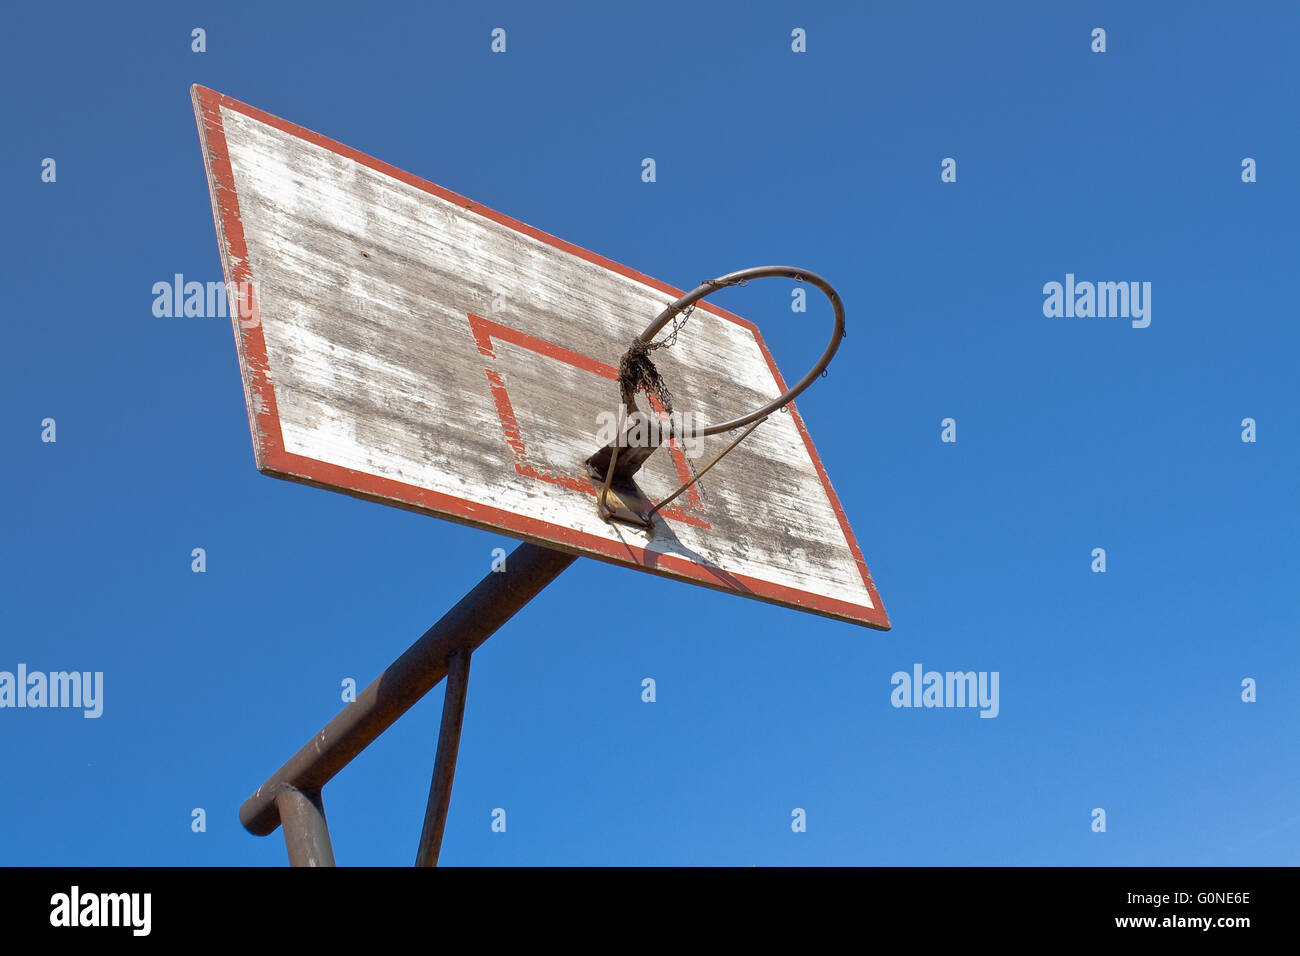 Old basketball hoop over blue sky Stock Photo